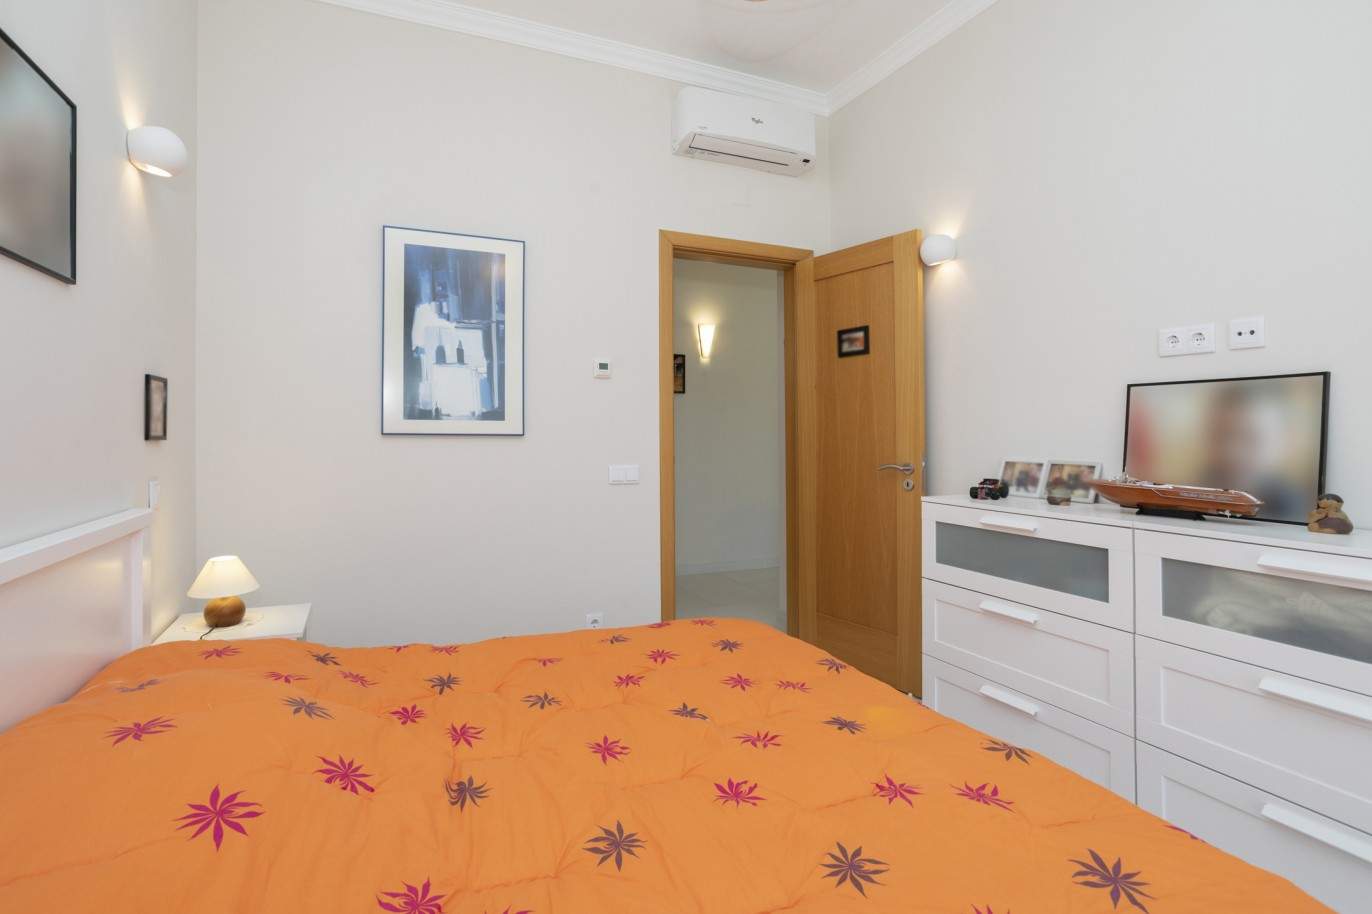 3 Bedroom Villa with swimming pool, for sale in Estoi, Algarve_201373